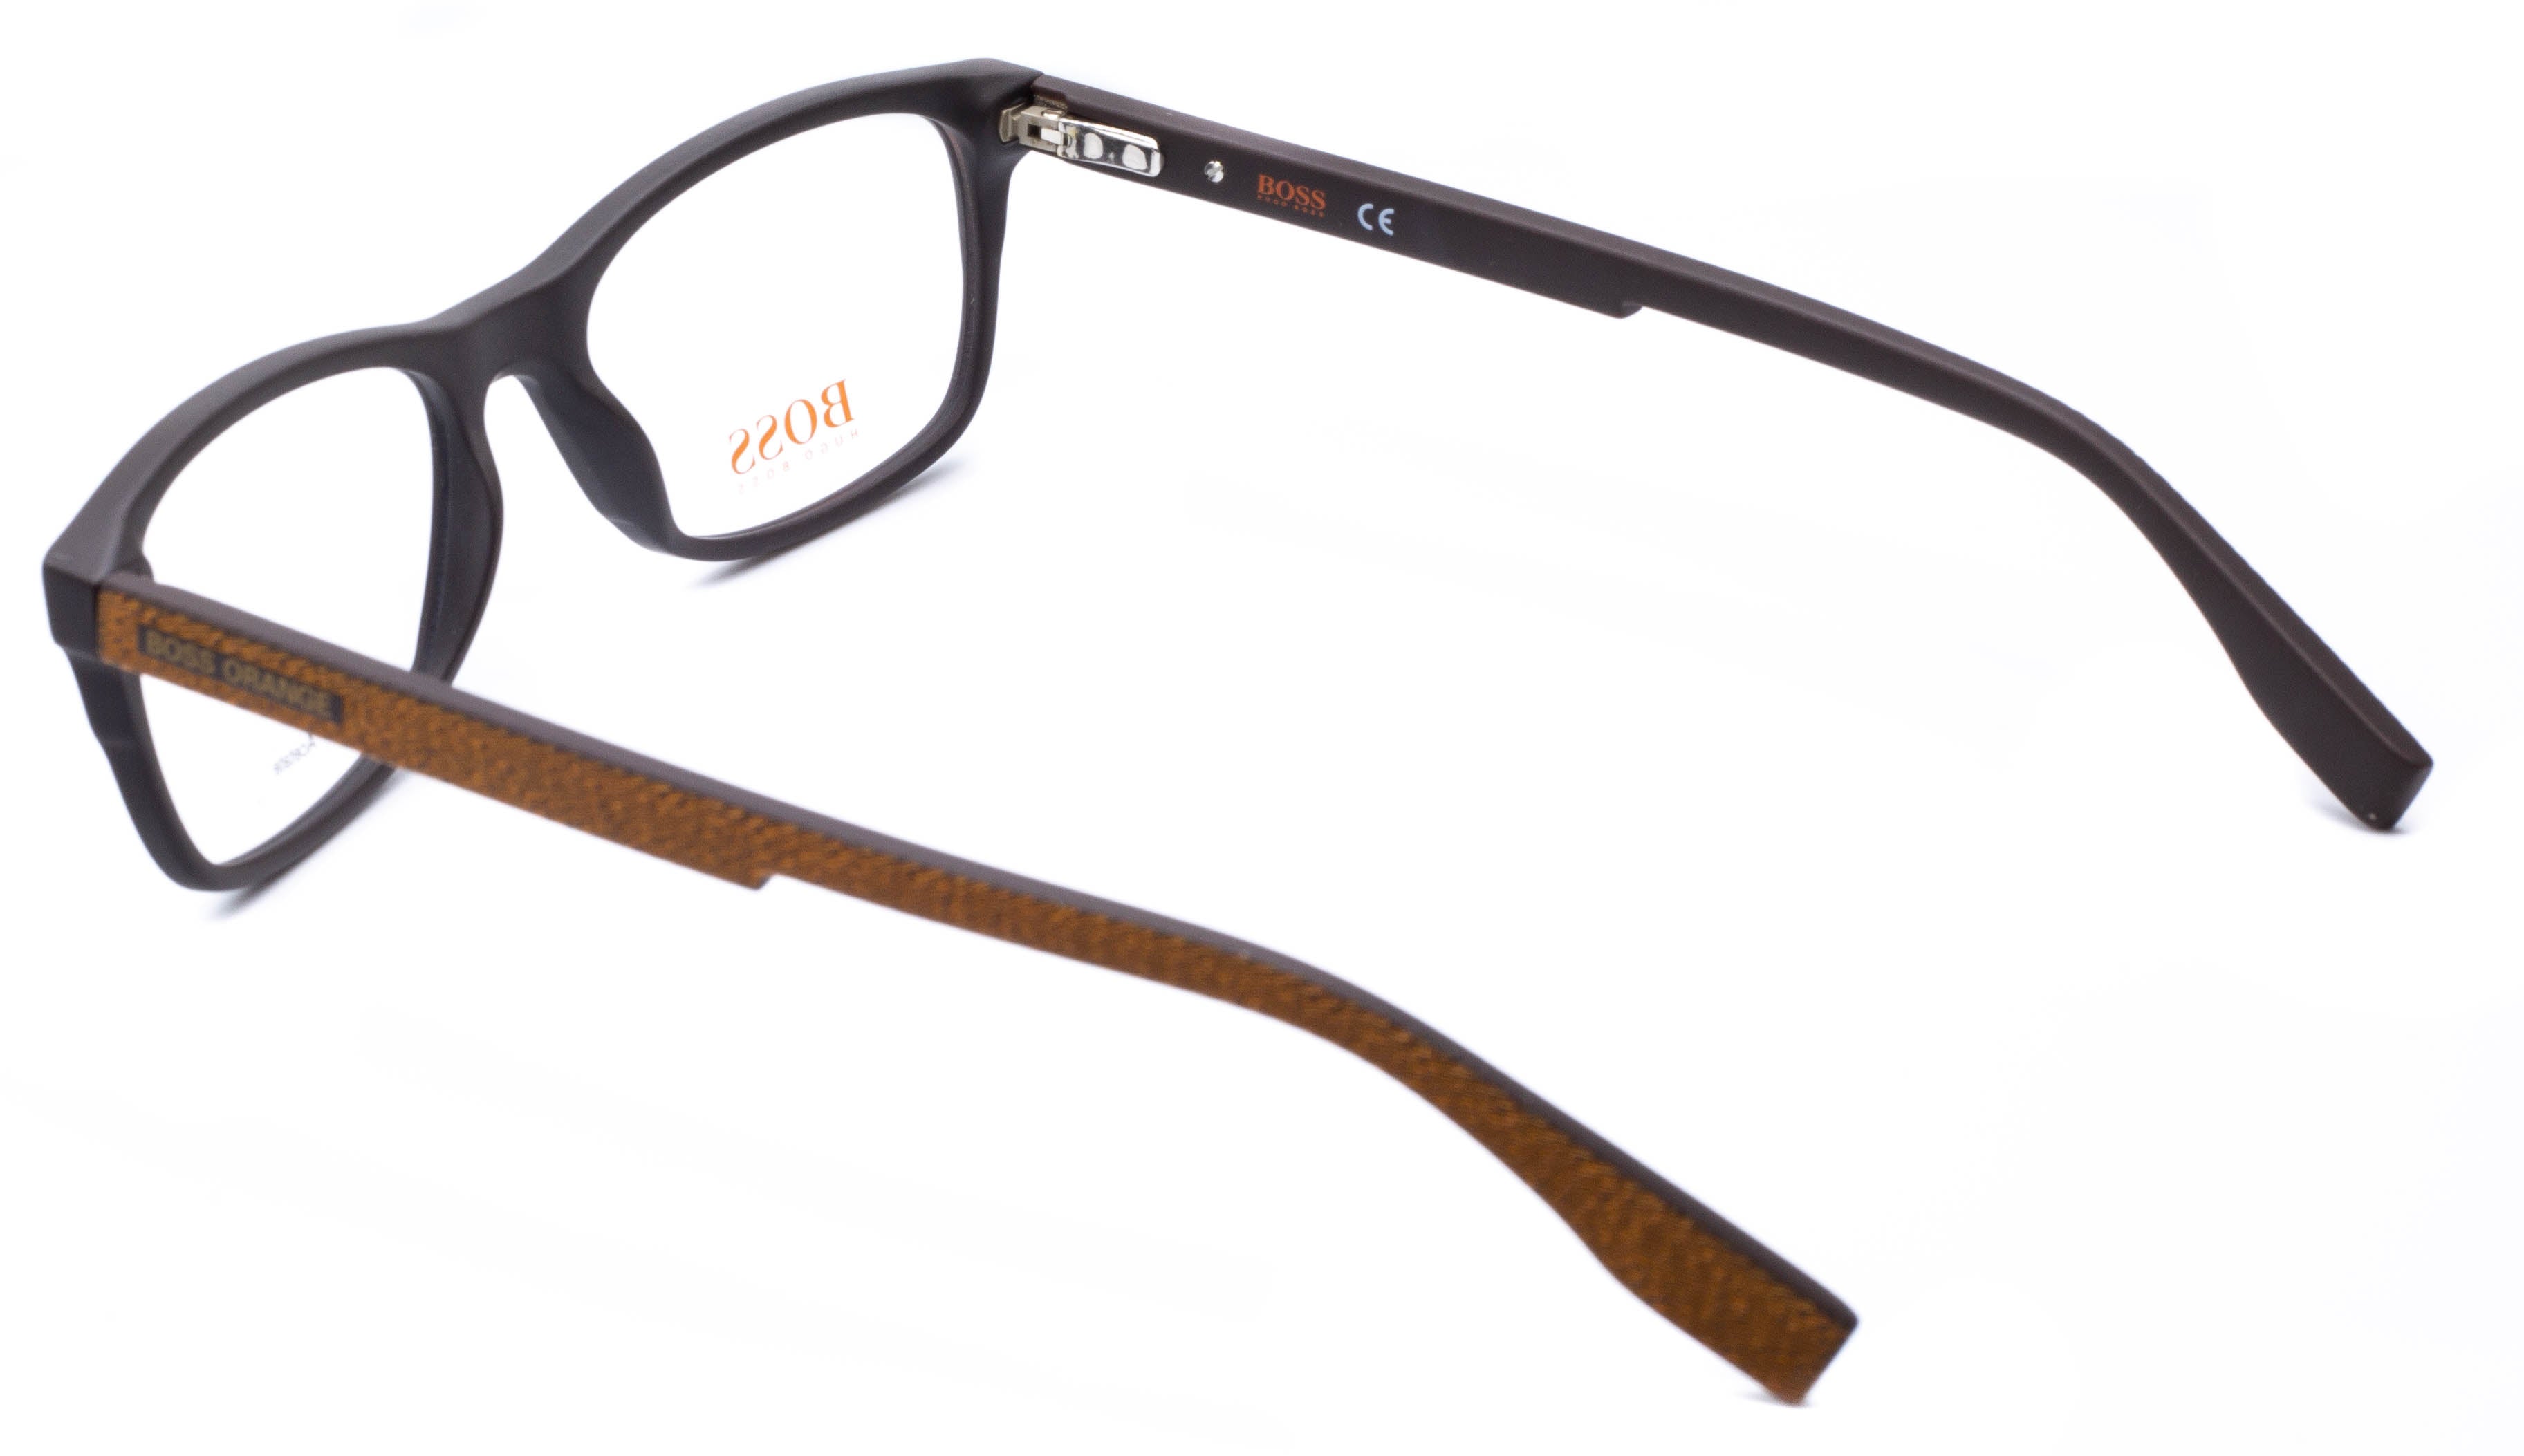 BOSS ORANGE BO 0292 09Q 52mm Eyewear FRAMES Glasses RX Optical Eyeglasses - New